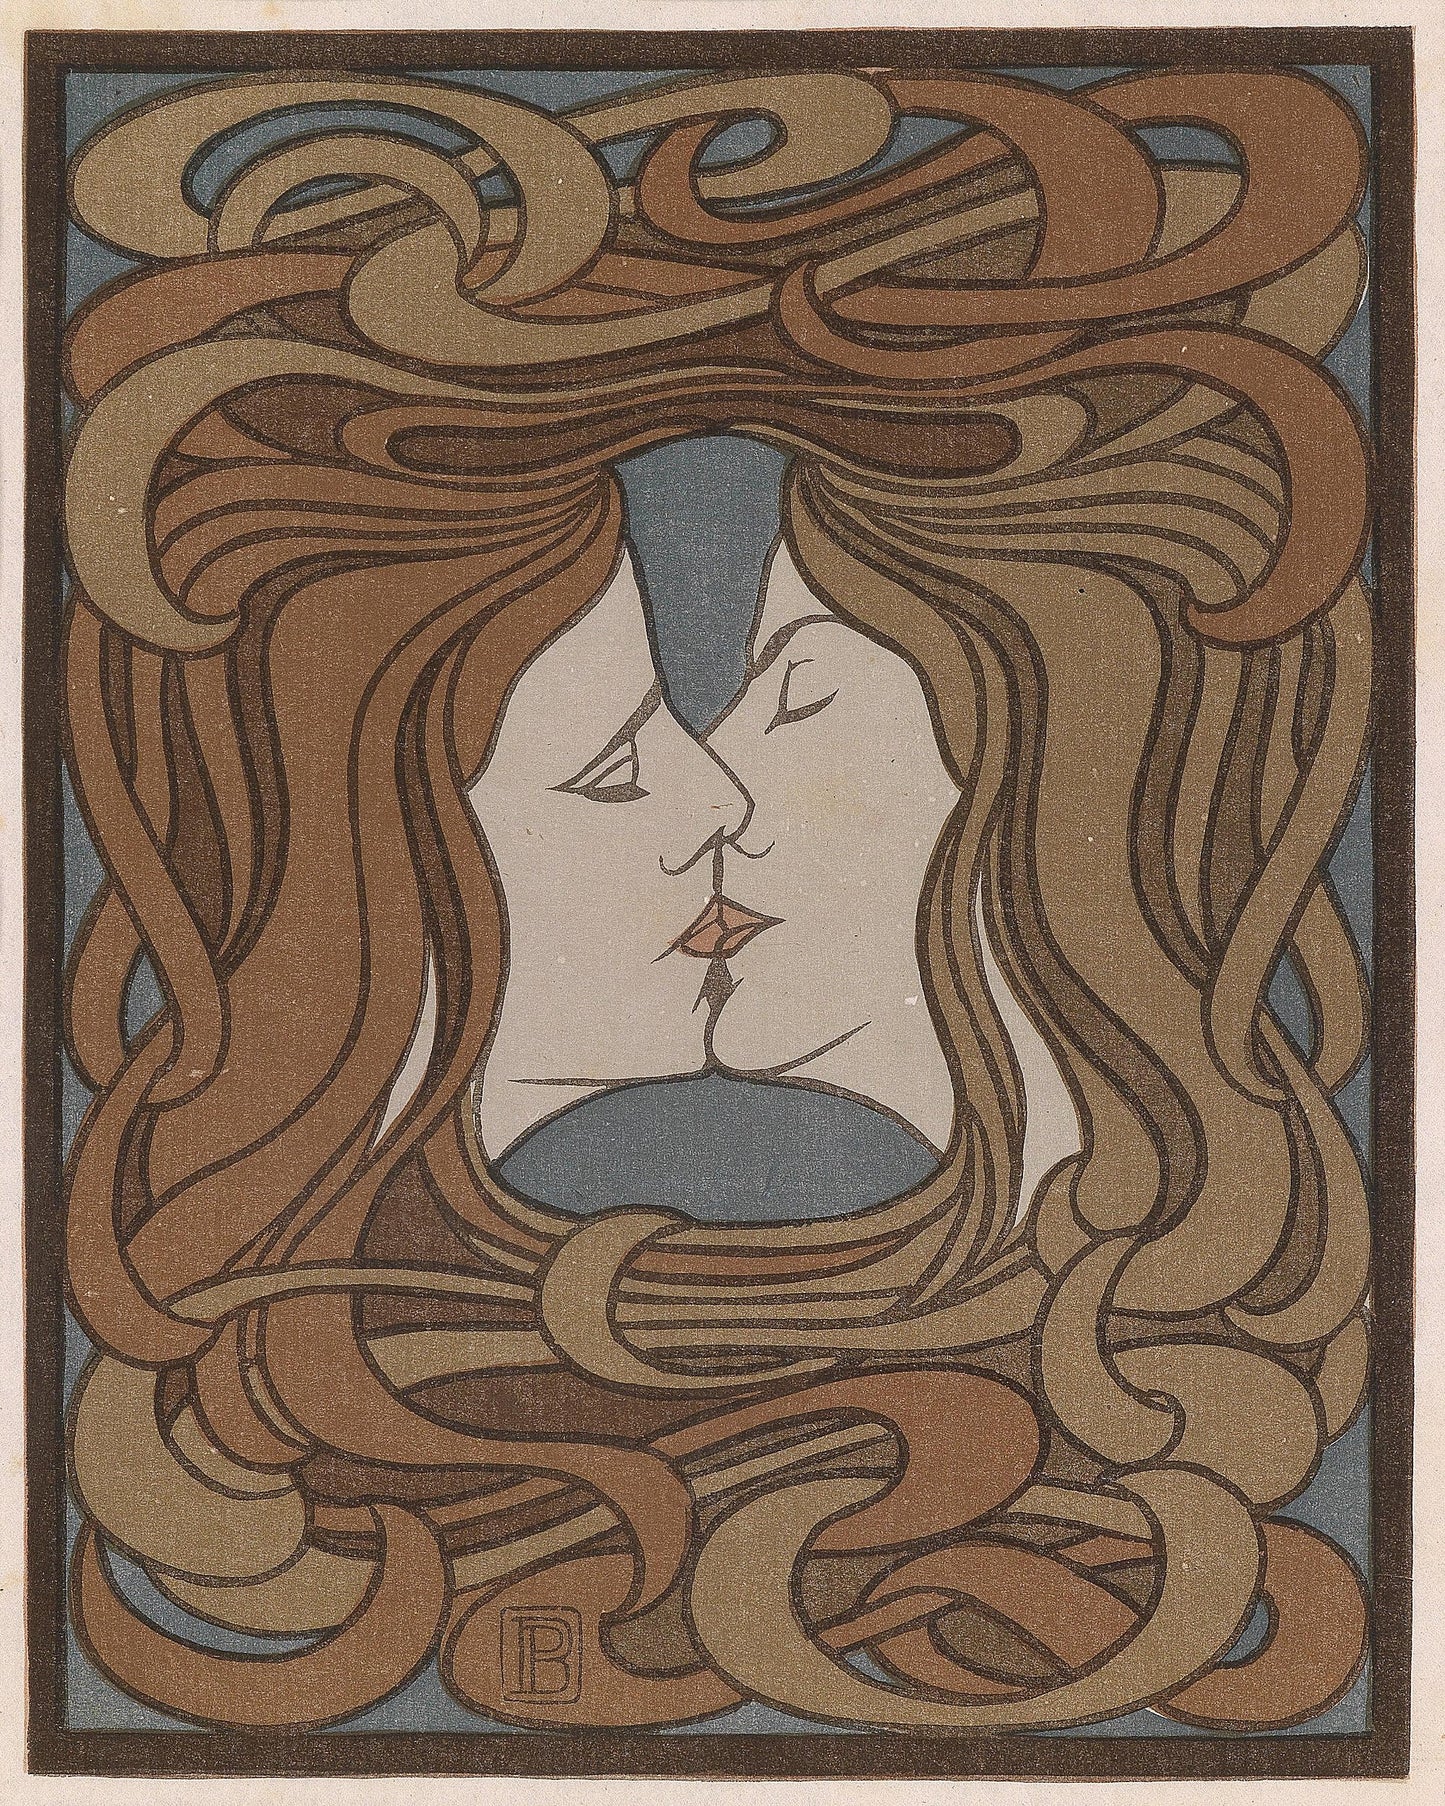 Peter Behrens “The Kiss” print (1898)  The Trumpet Shop   